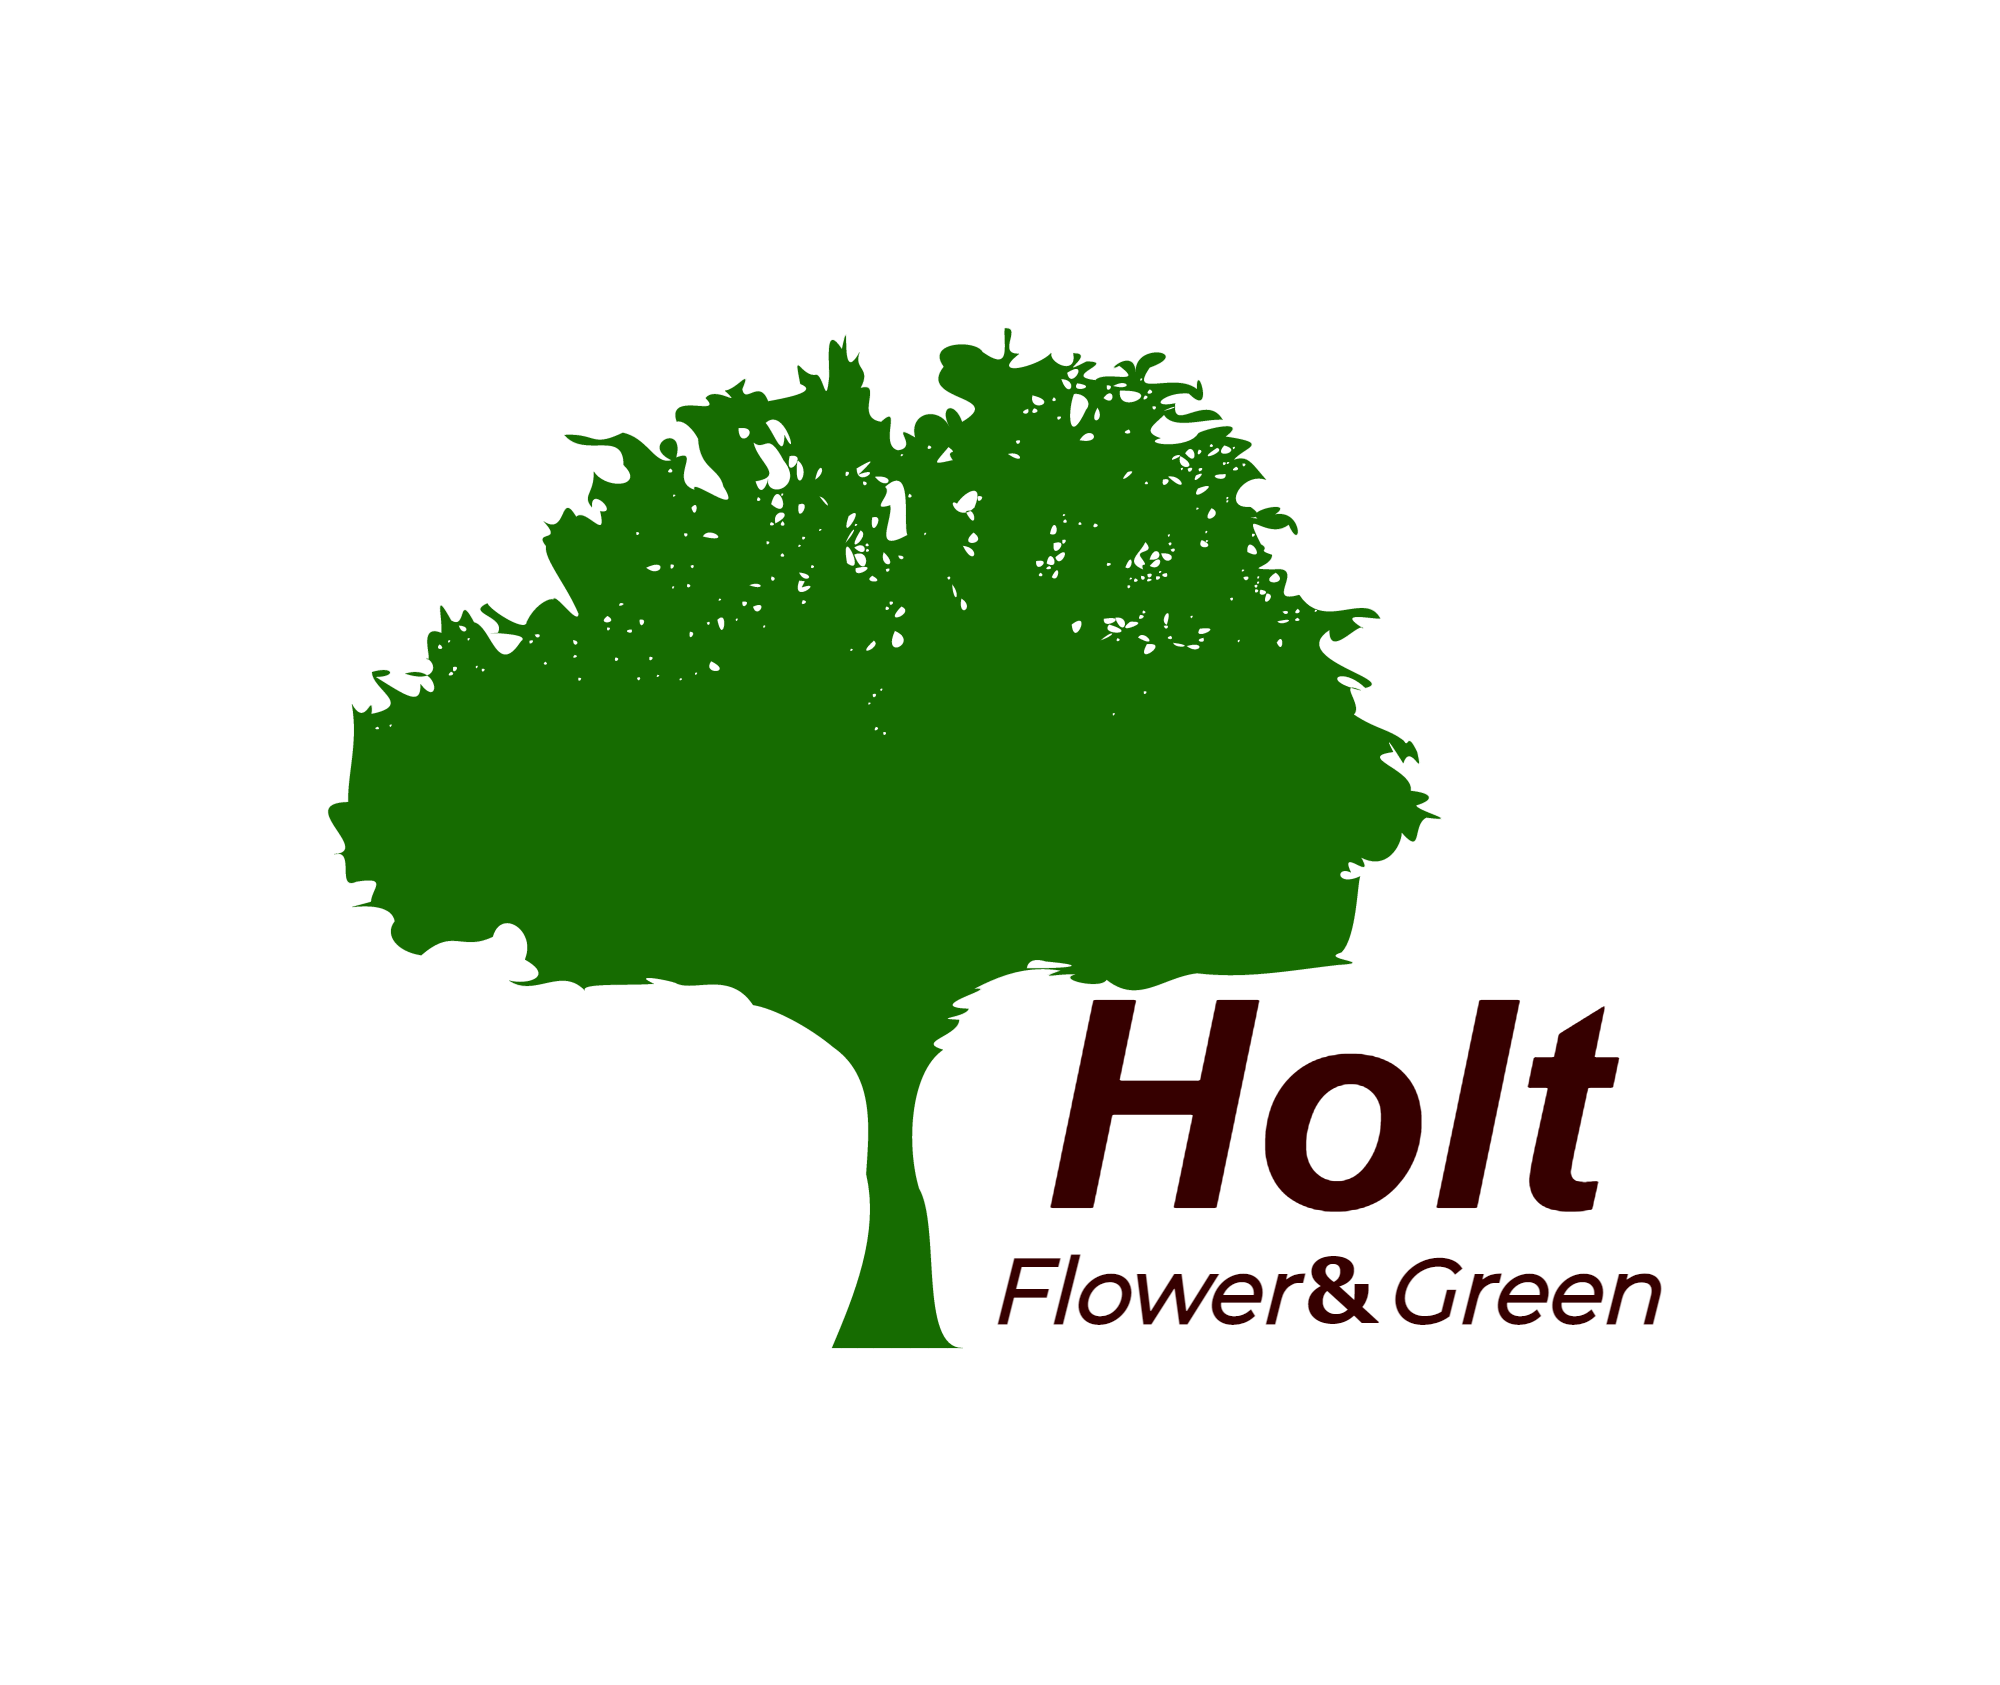 Holt Flower&Green